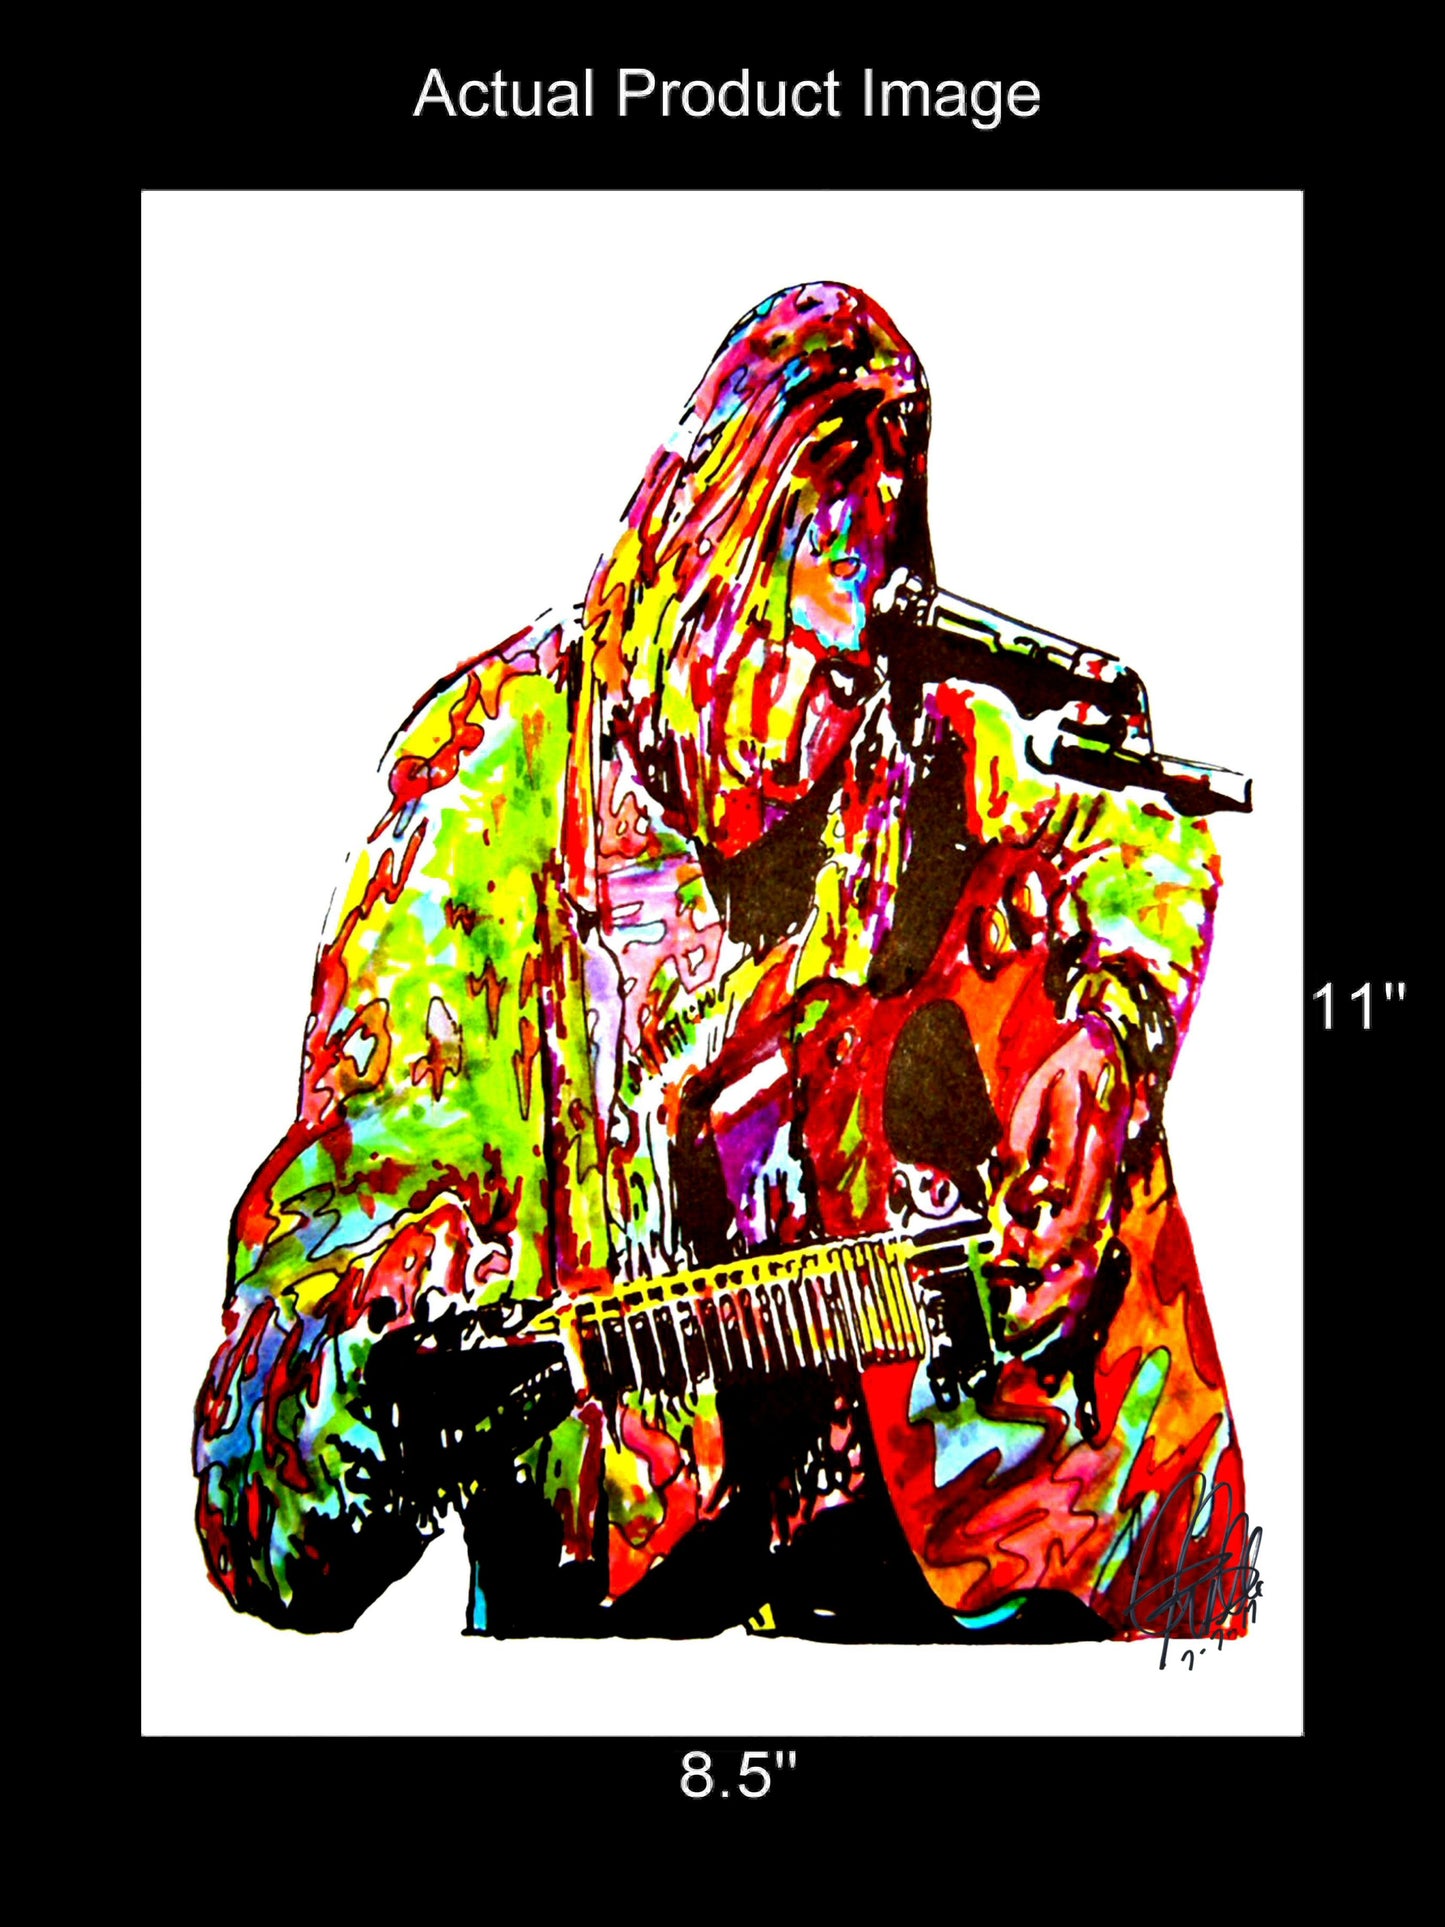 Kurt Cobain Nirvana Singer Rock Music Poster Print Wall Art 8.5x11